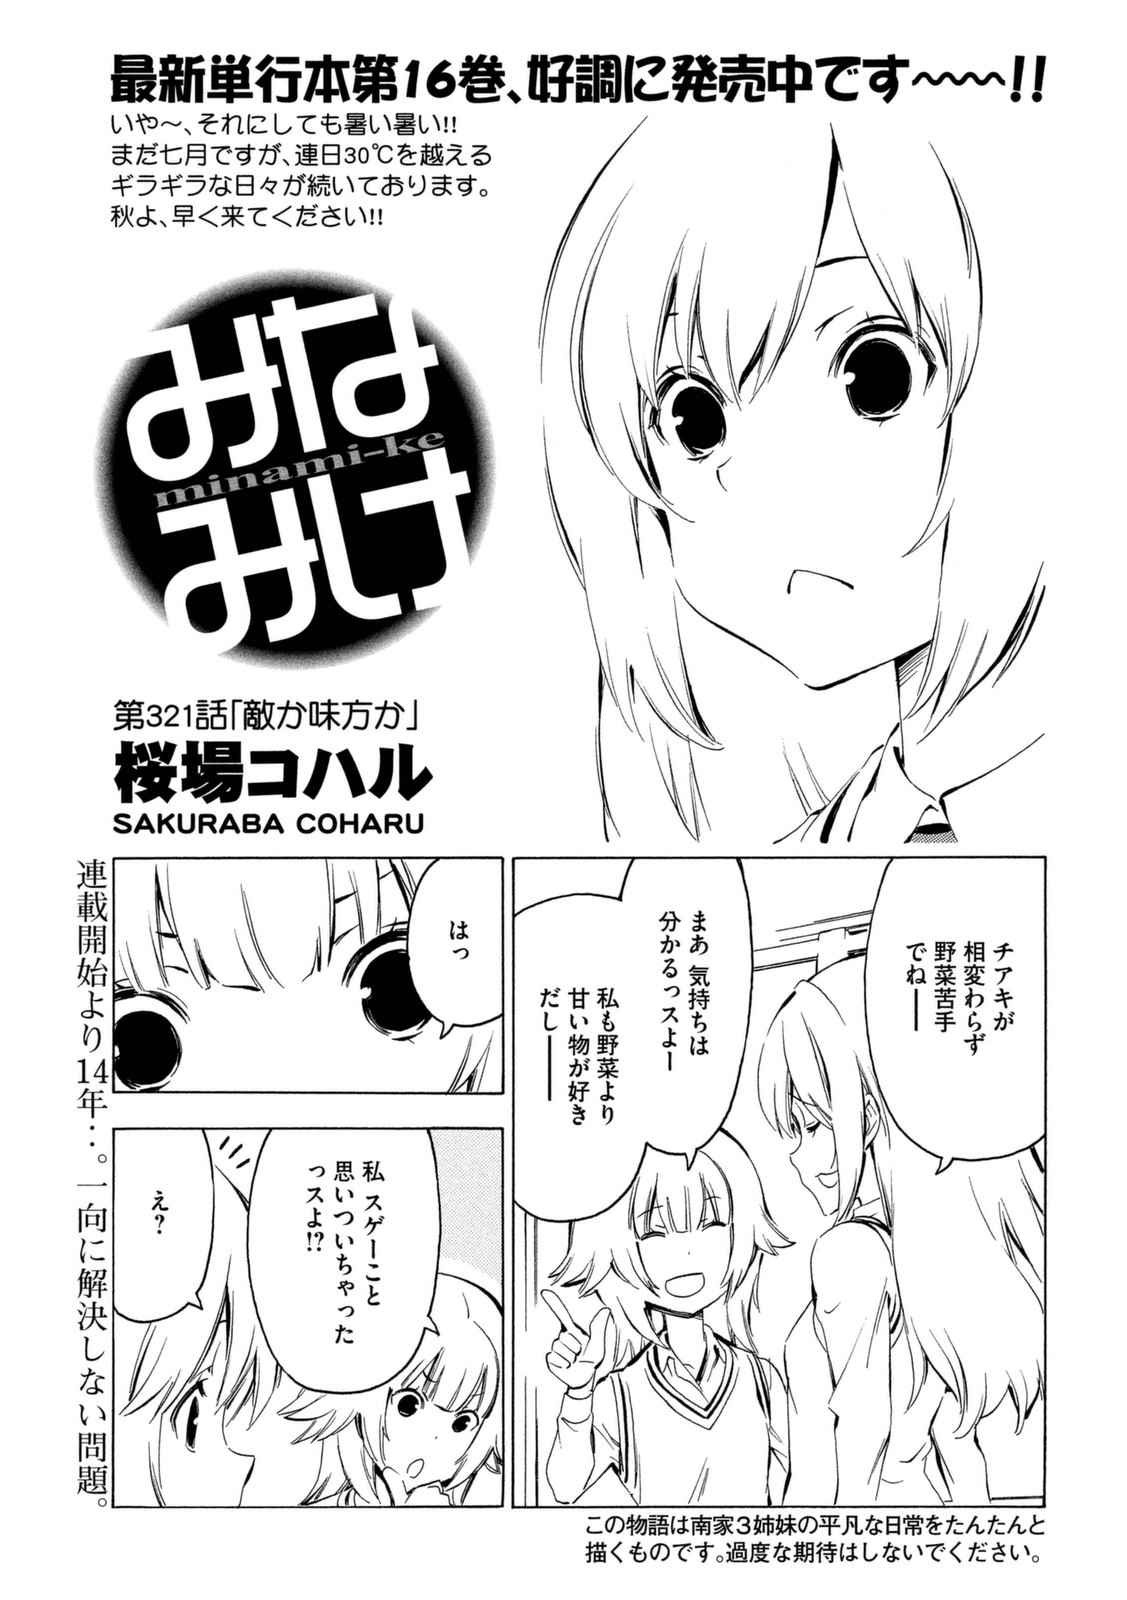 Minami-ke - Chapter 321 - Page 1